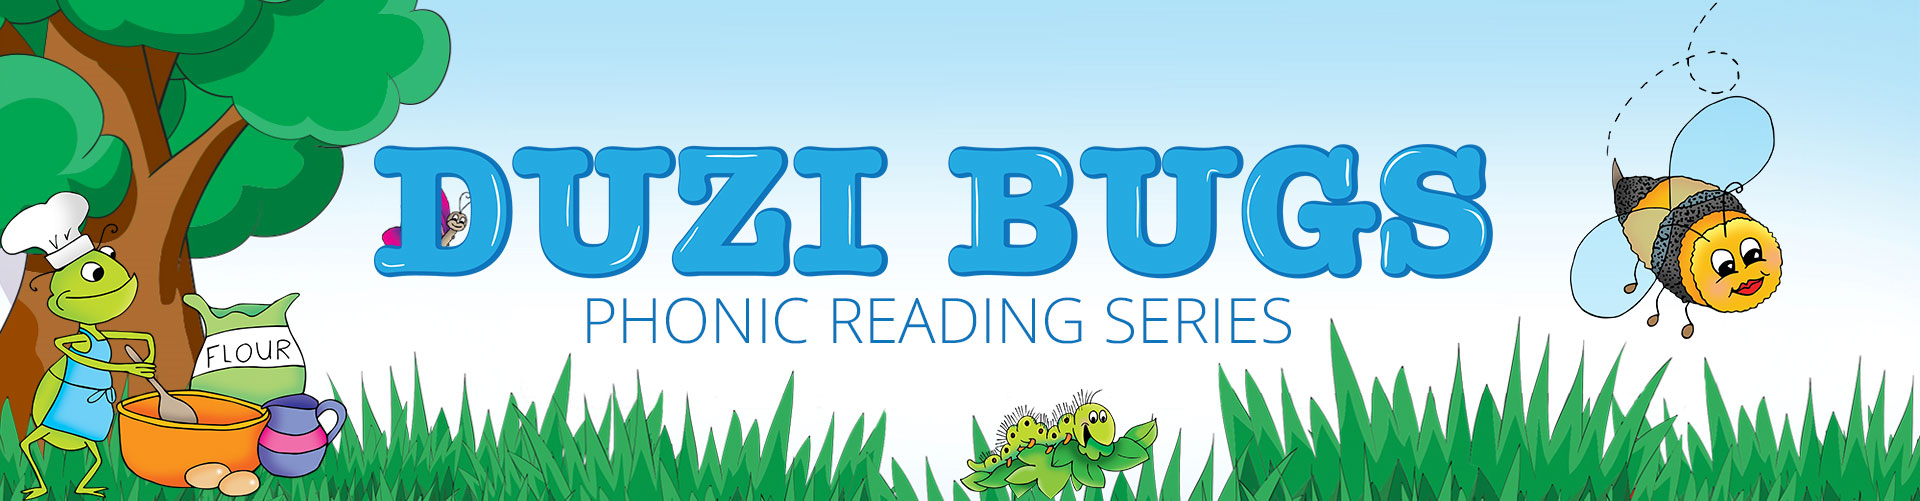 Duzi Bugs Phonic Reading Series